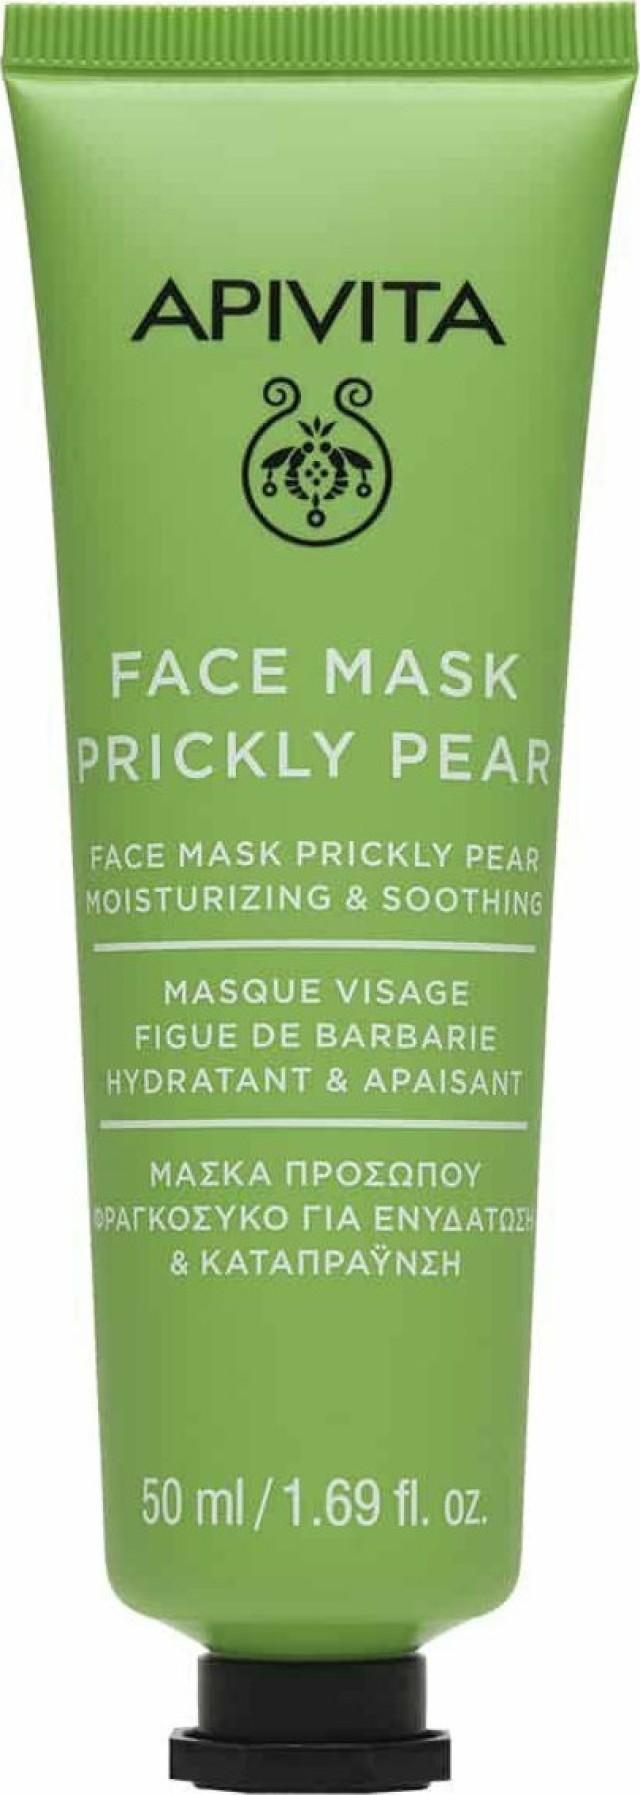 APIVITA Face Mask Prickly Pear Μάσκα Προσώπου με Φραγκόσυκο για Ενυδάτωση & Καταπράυνση 50ml